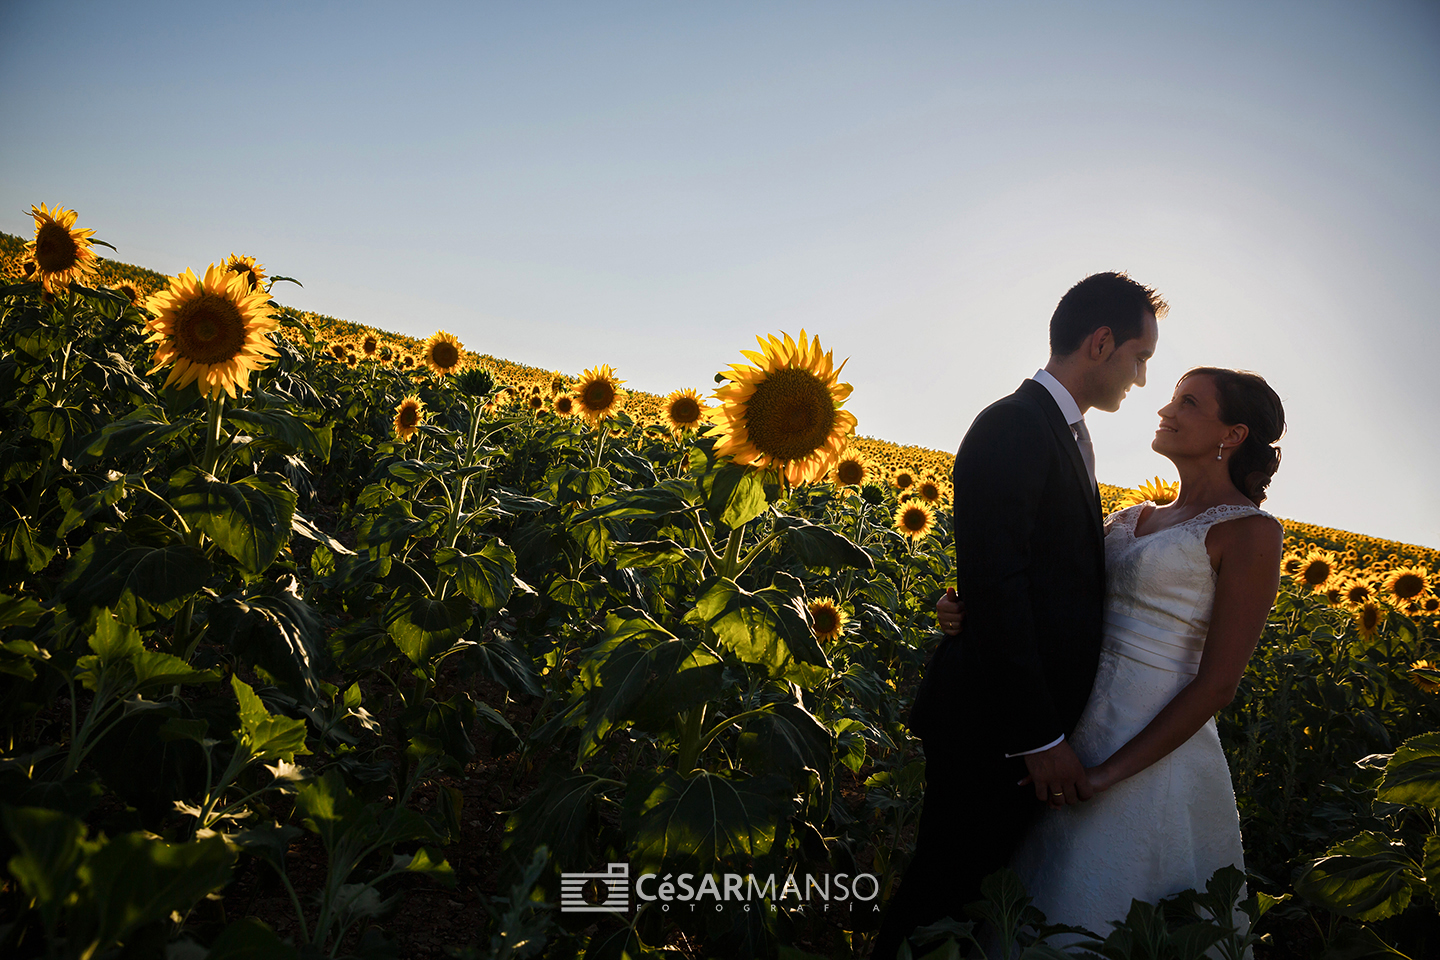 César Manso Fotógrafo: Fotógrafos de boda en Burgos - Boda%20AlejandrayJairo-1.JPG